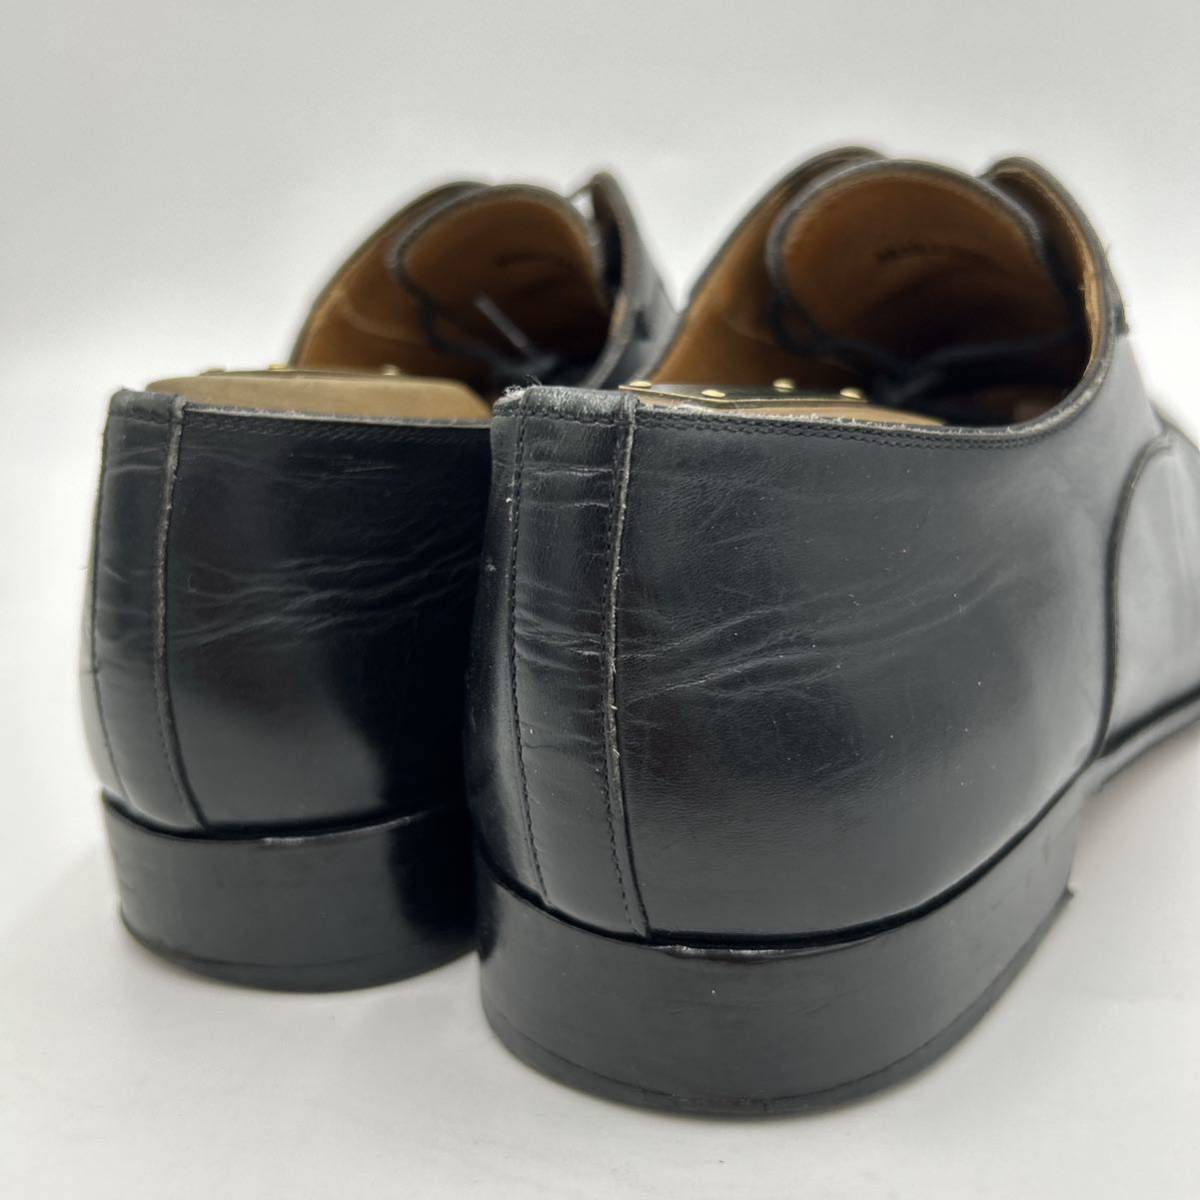 D @ スペイン製 '高級感溢れる' MAGNANNI マグナーニ 本革 ビジネスシューズ 革靴 EU42 26.5cm 紳士靴 ストレートチップ 内羽根式 BLACK _画像5